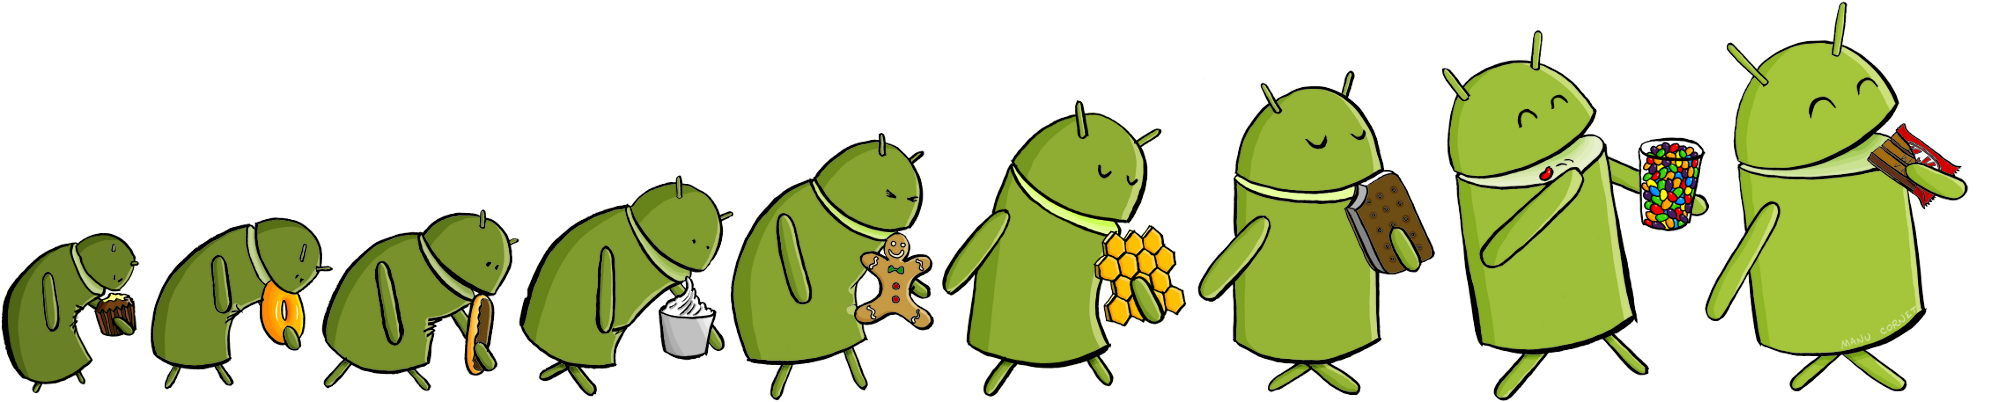 android-evolution-kitkat.png